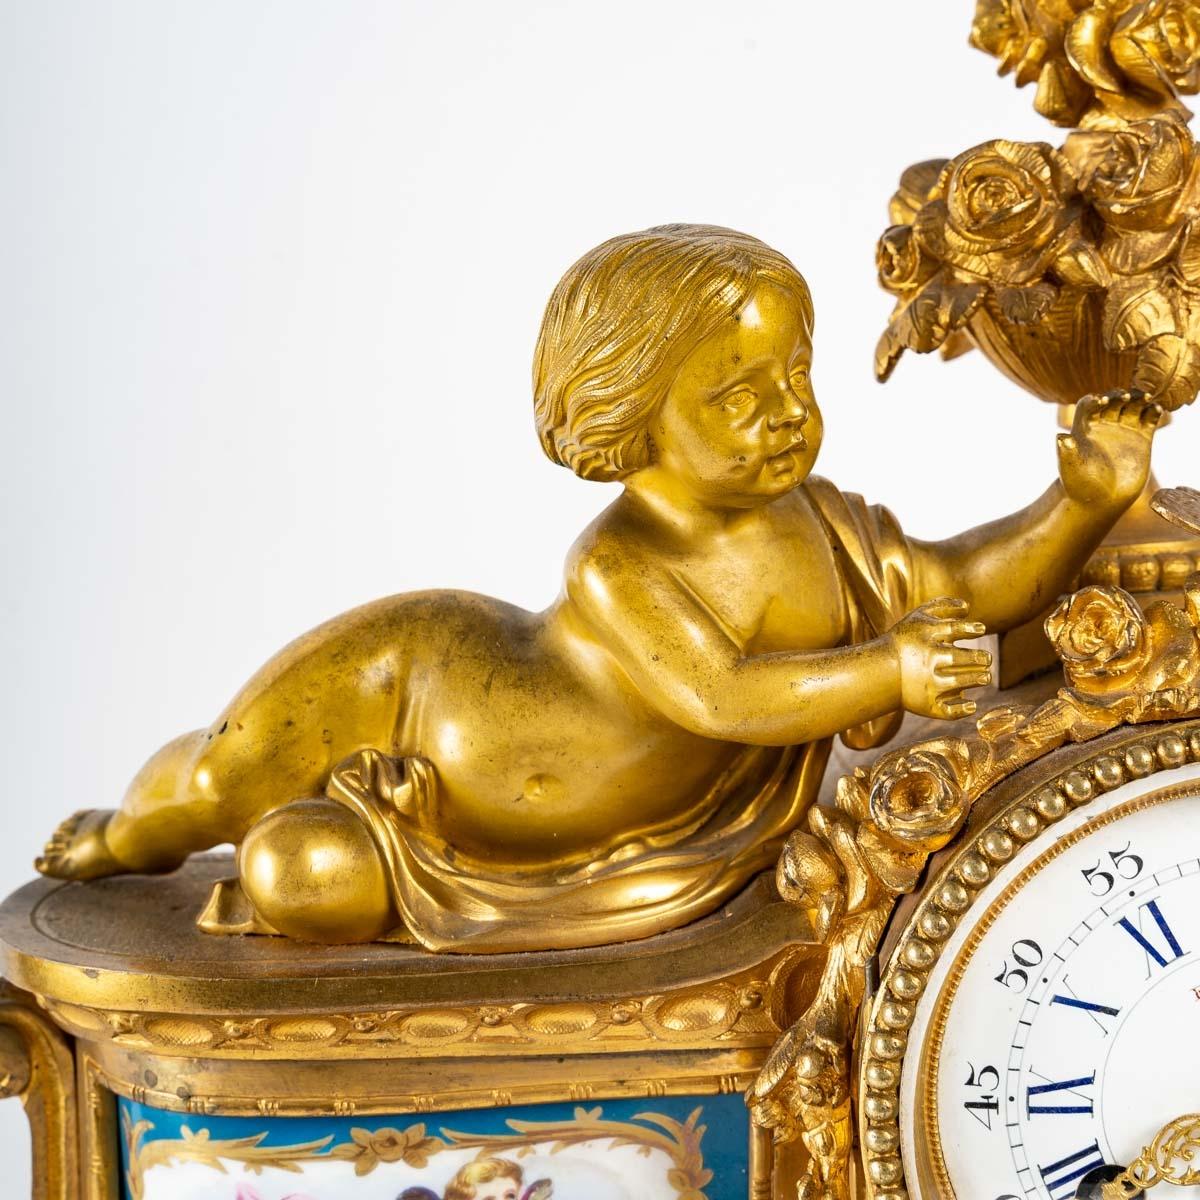 Napoleon III Gilt bronze and porcelain clock, 19th century